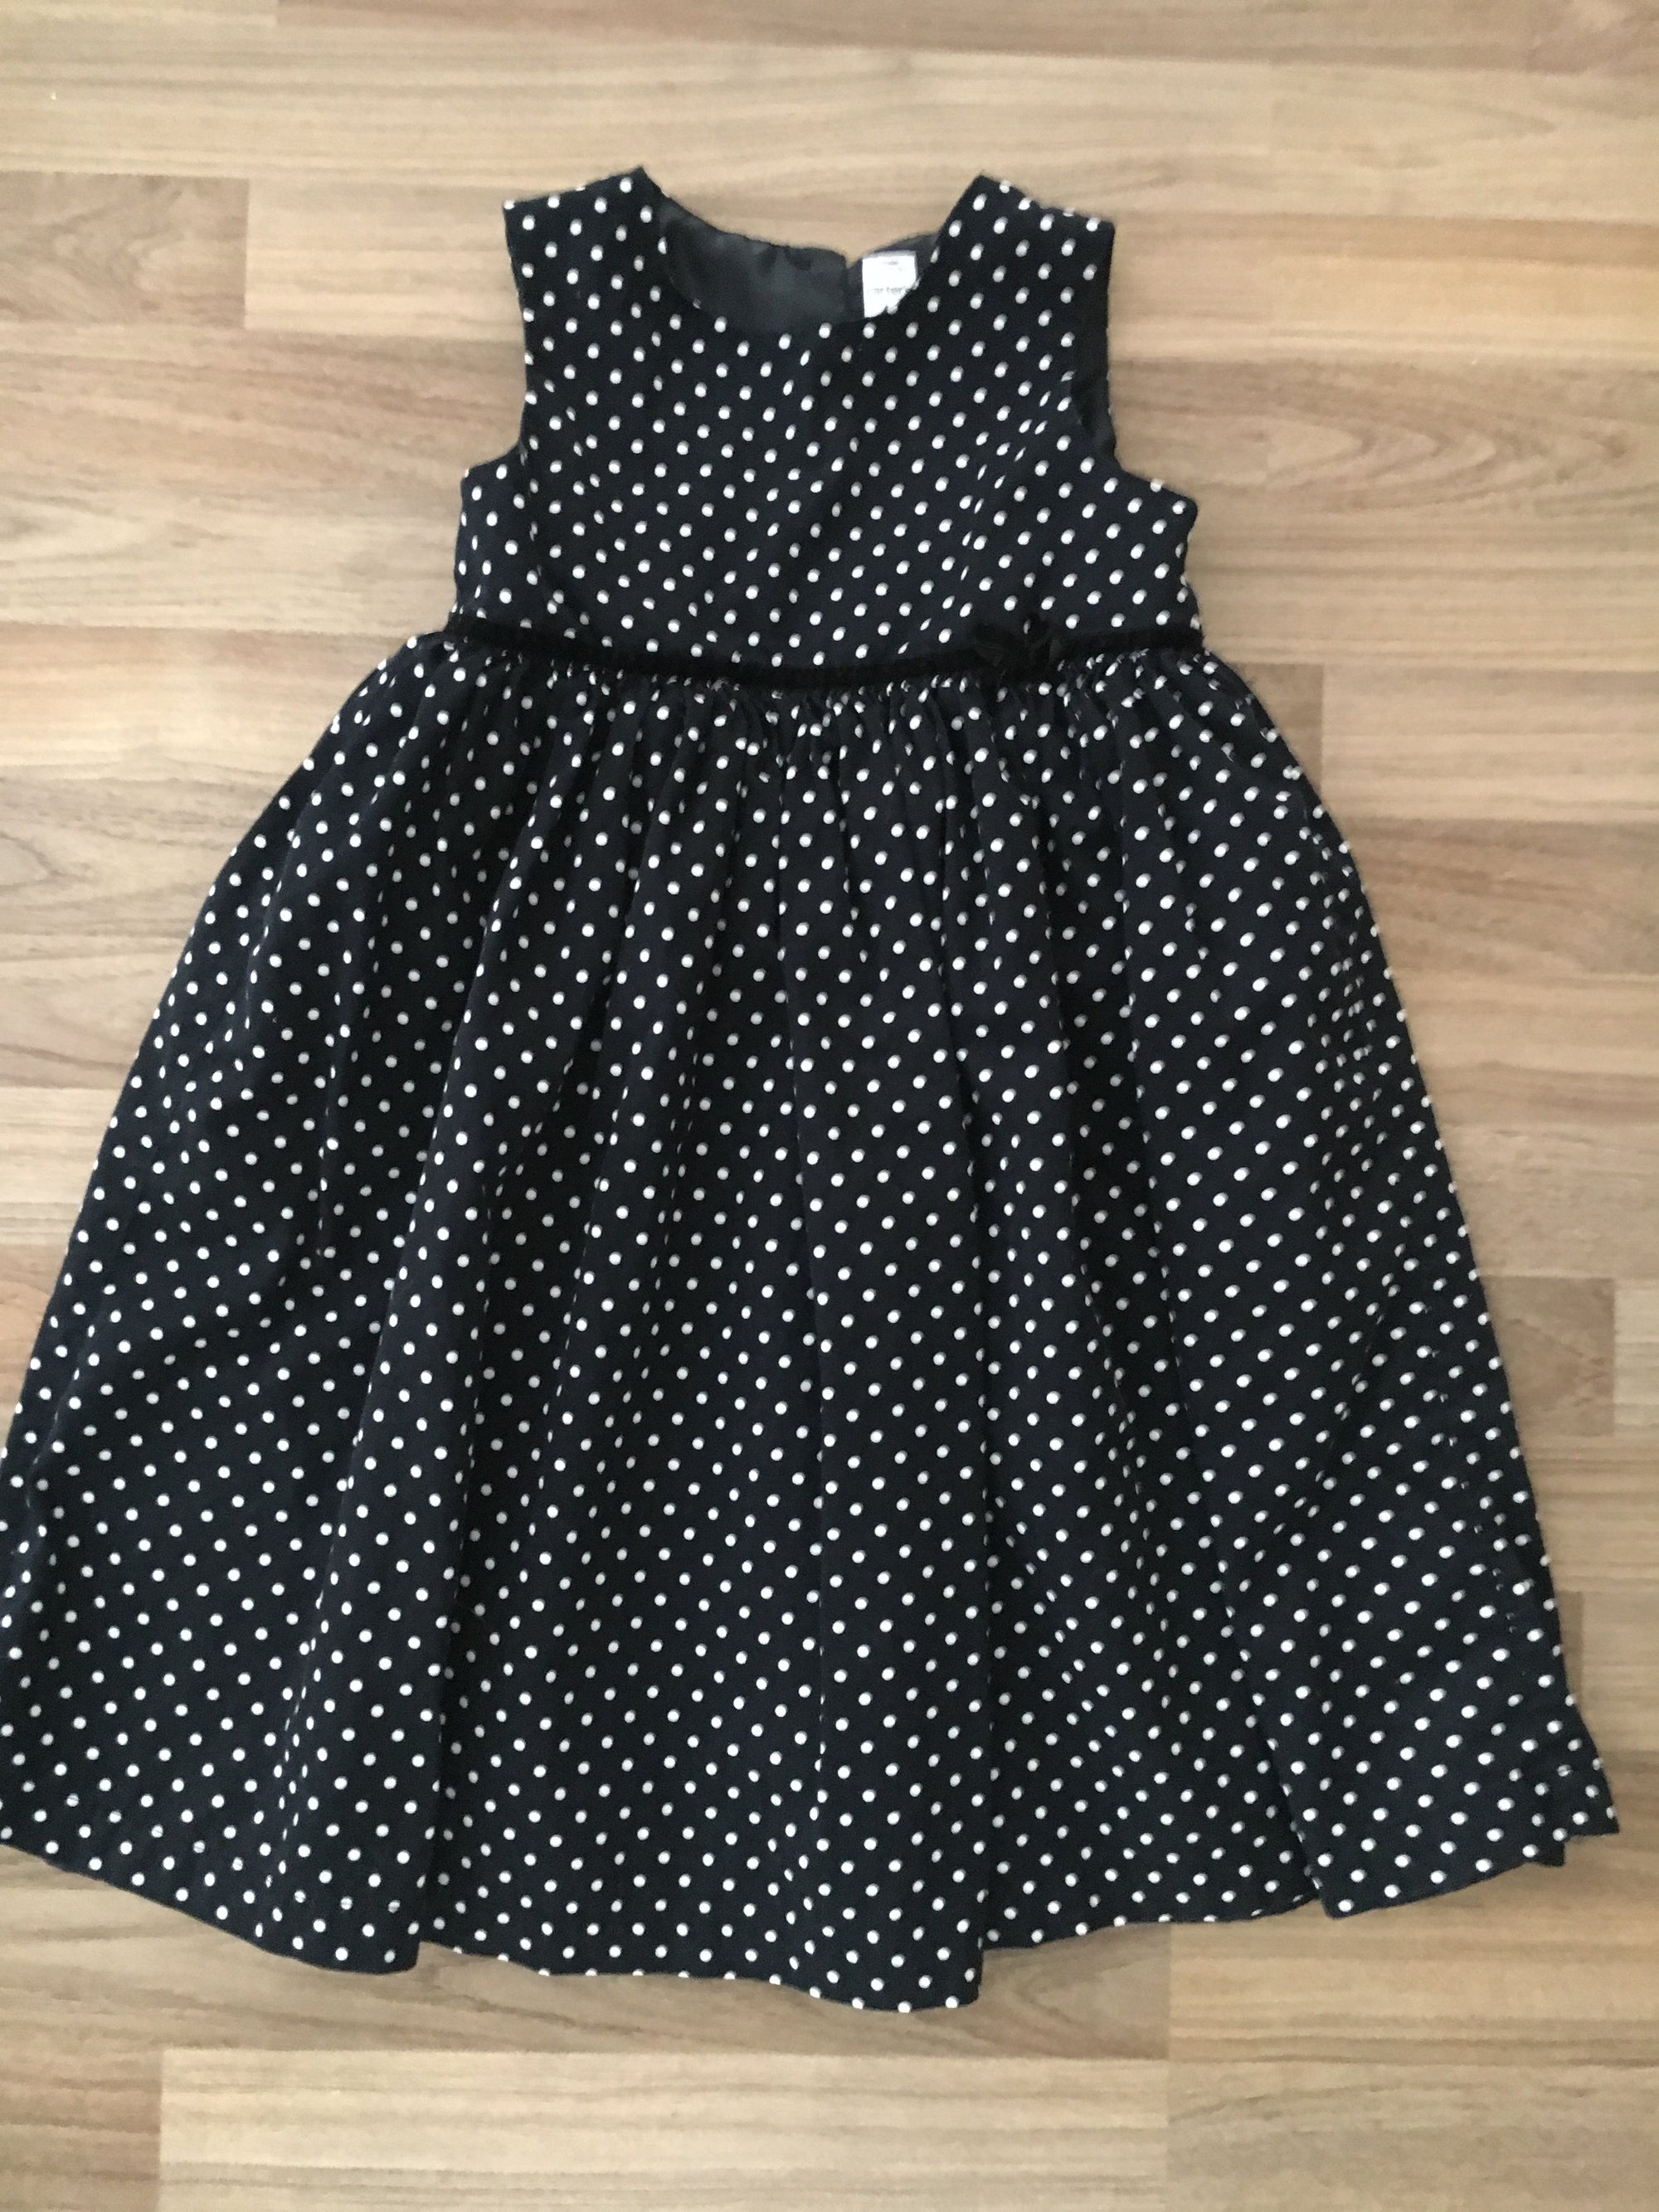 Black Polka Dotted Dress (Girls Size 6X)